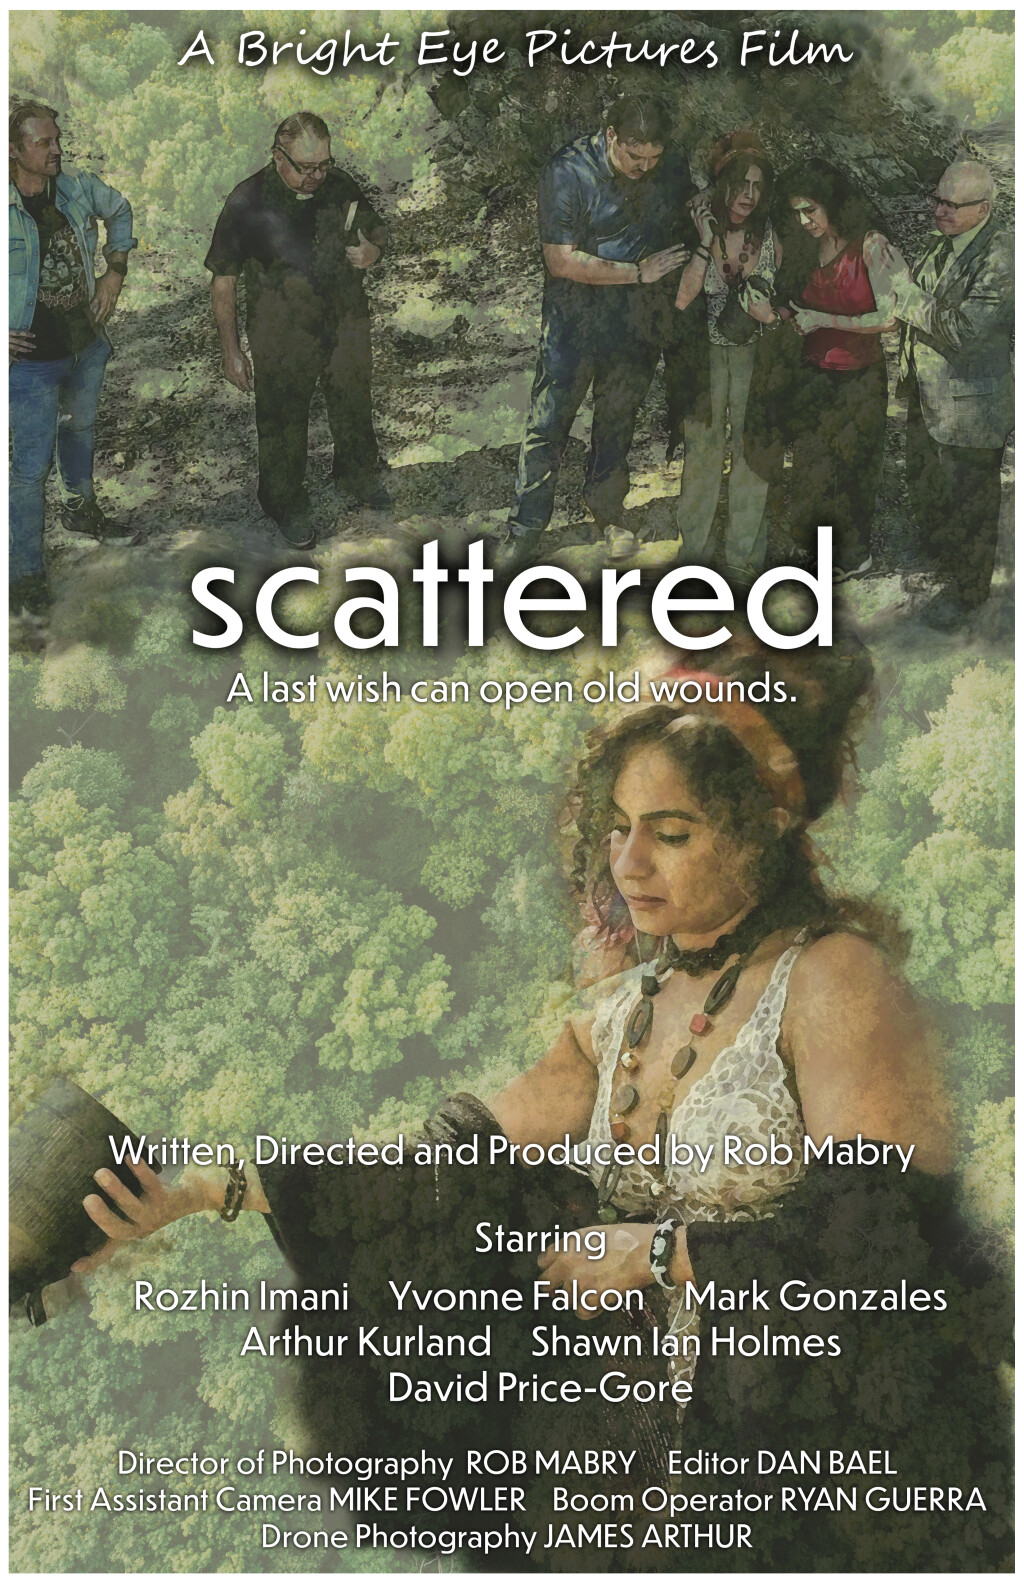 Filmposter for Scattered